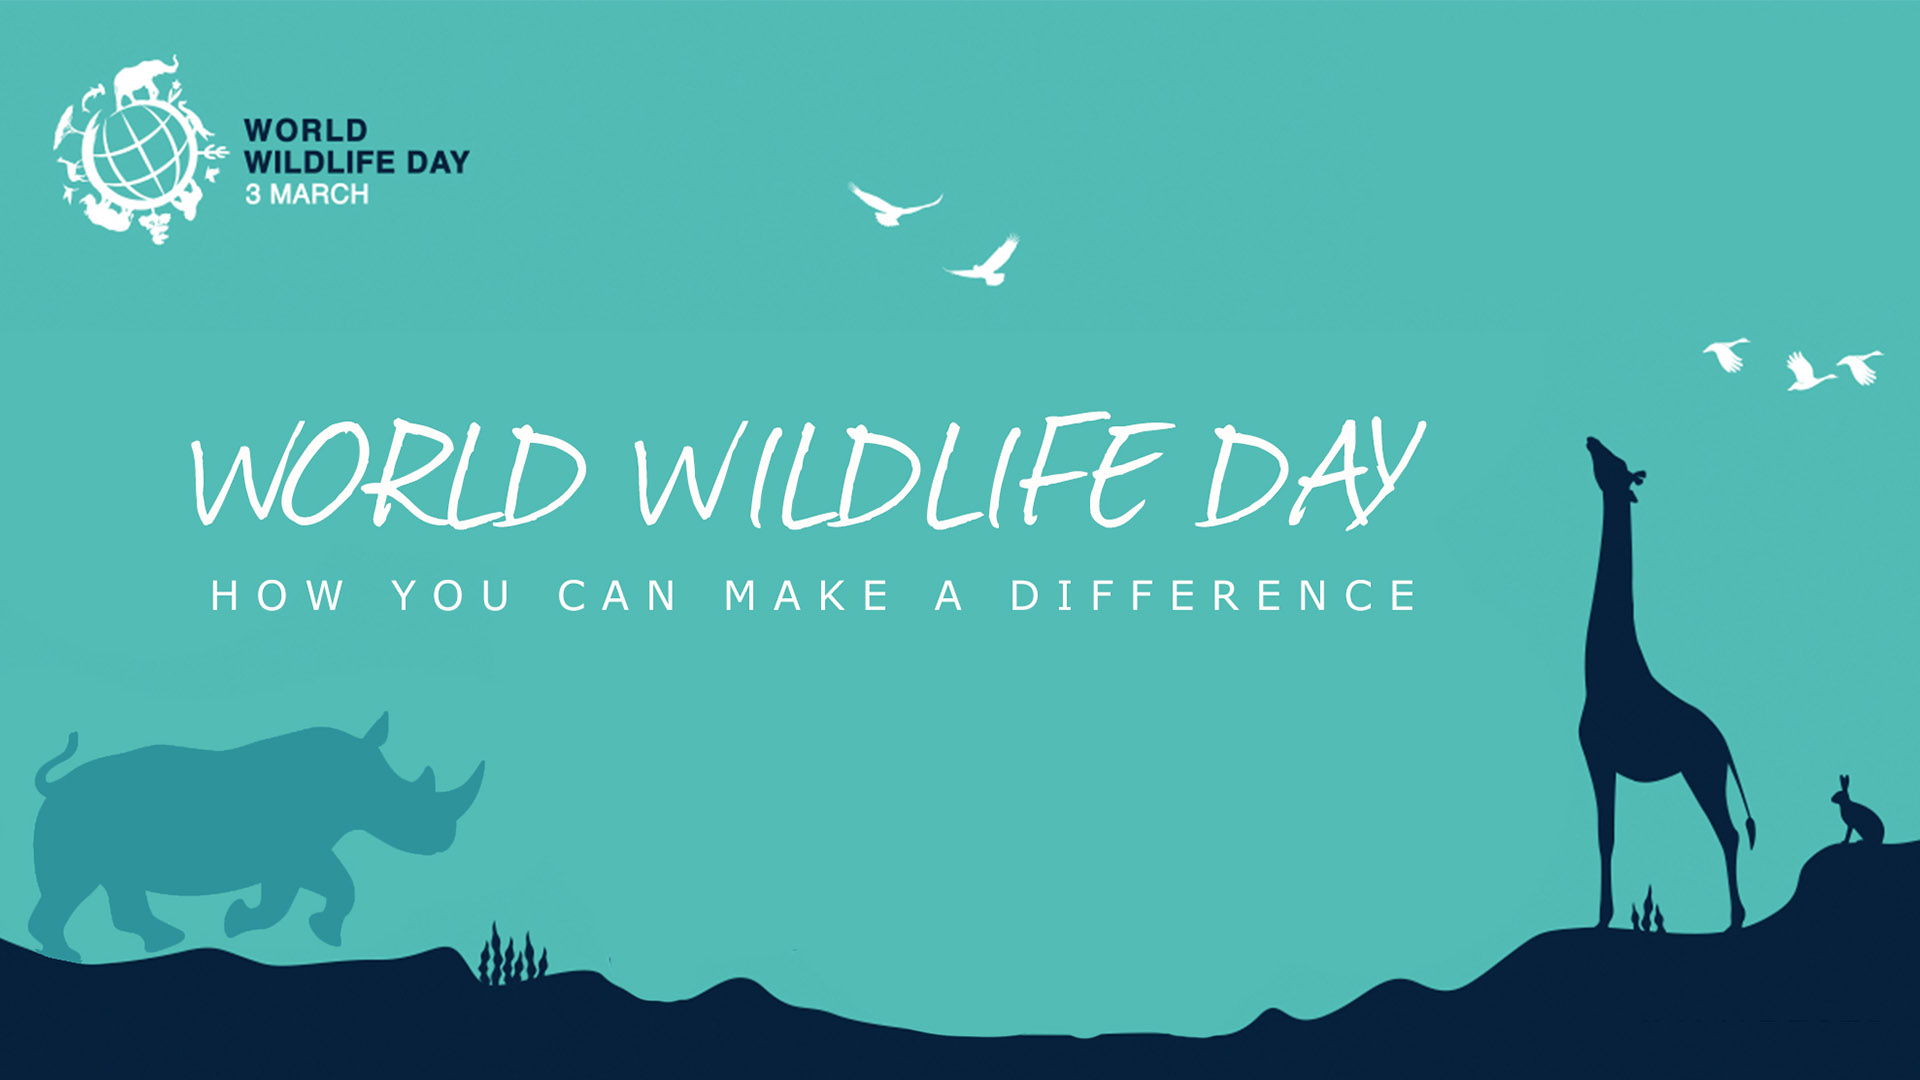 March 3 World Wildlife Day Digital Signage Graphic